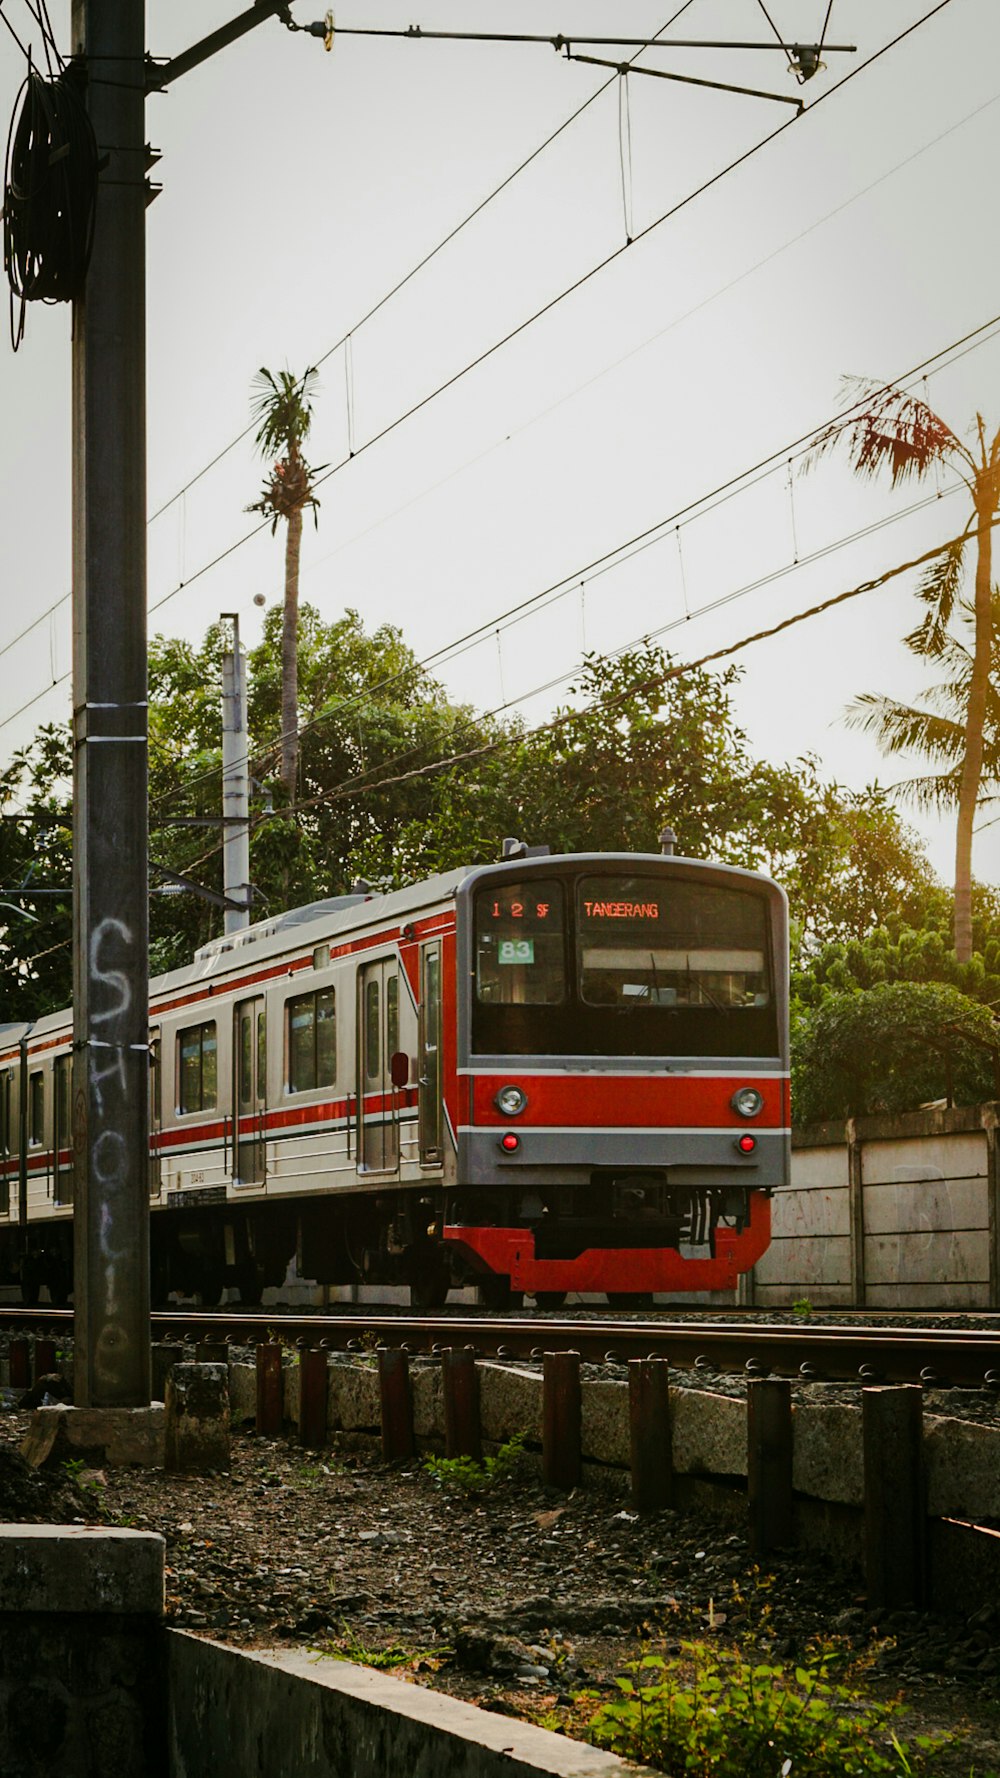 red and black train on rail tracks